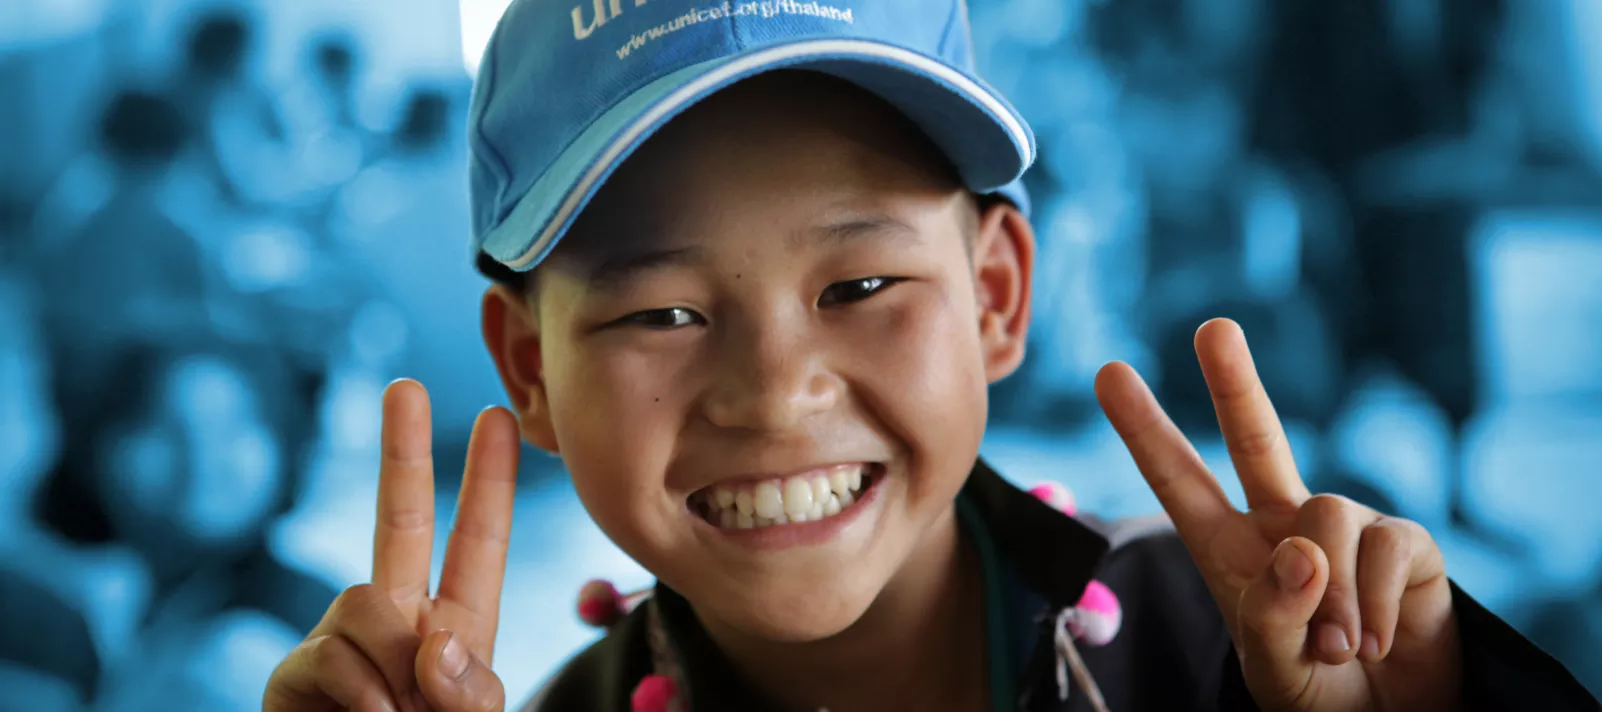 A boy wearing UNICEF cap is smiling.